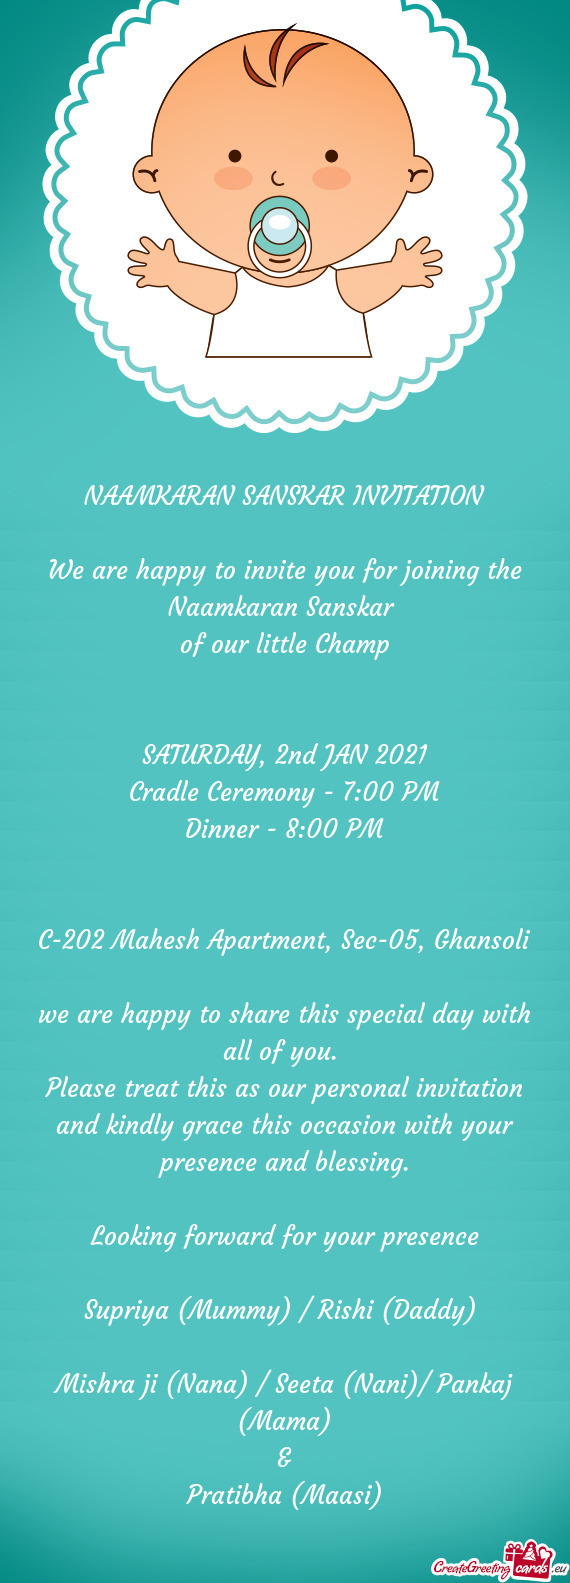 NAAMKARAN SANSKAR INVITATION